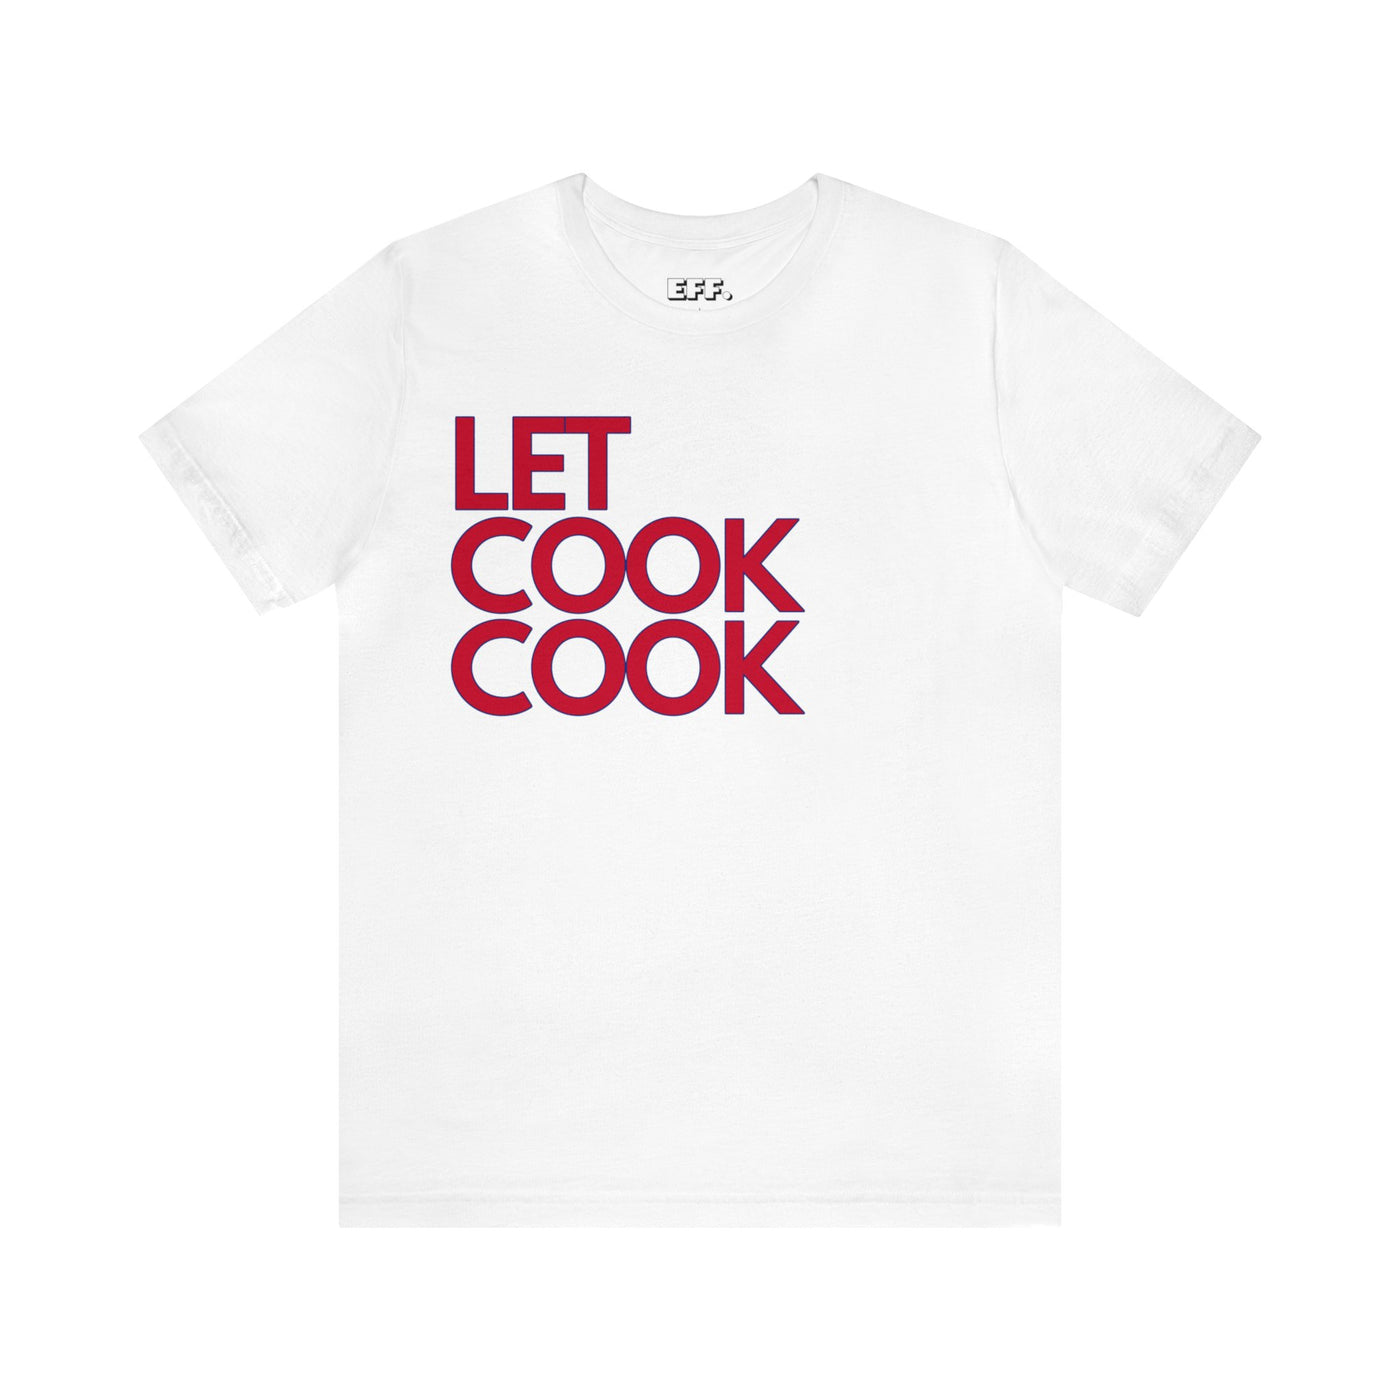 Let Cook Cook